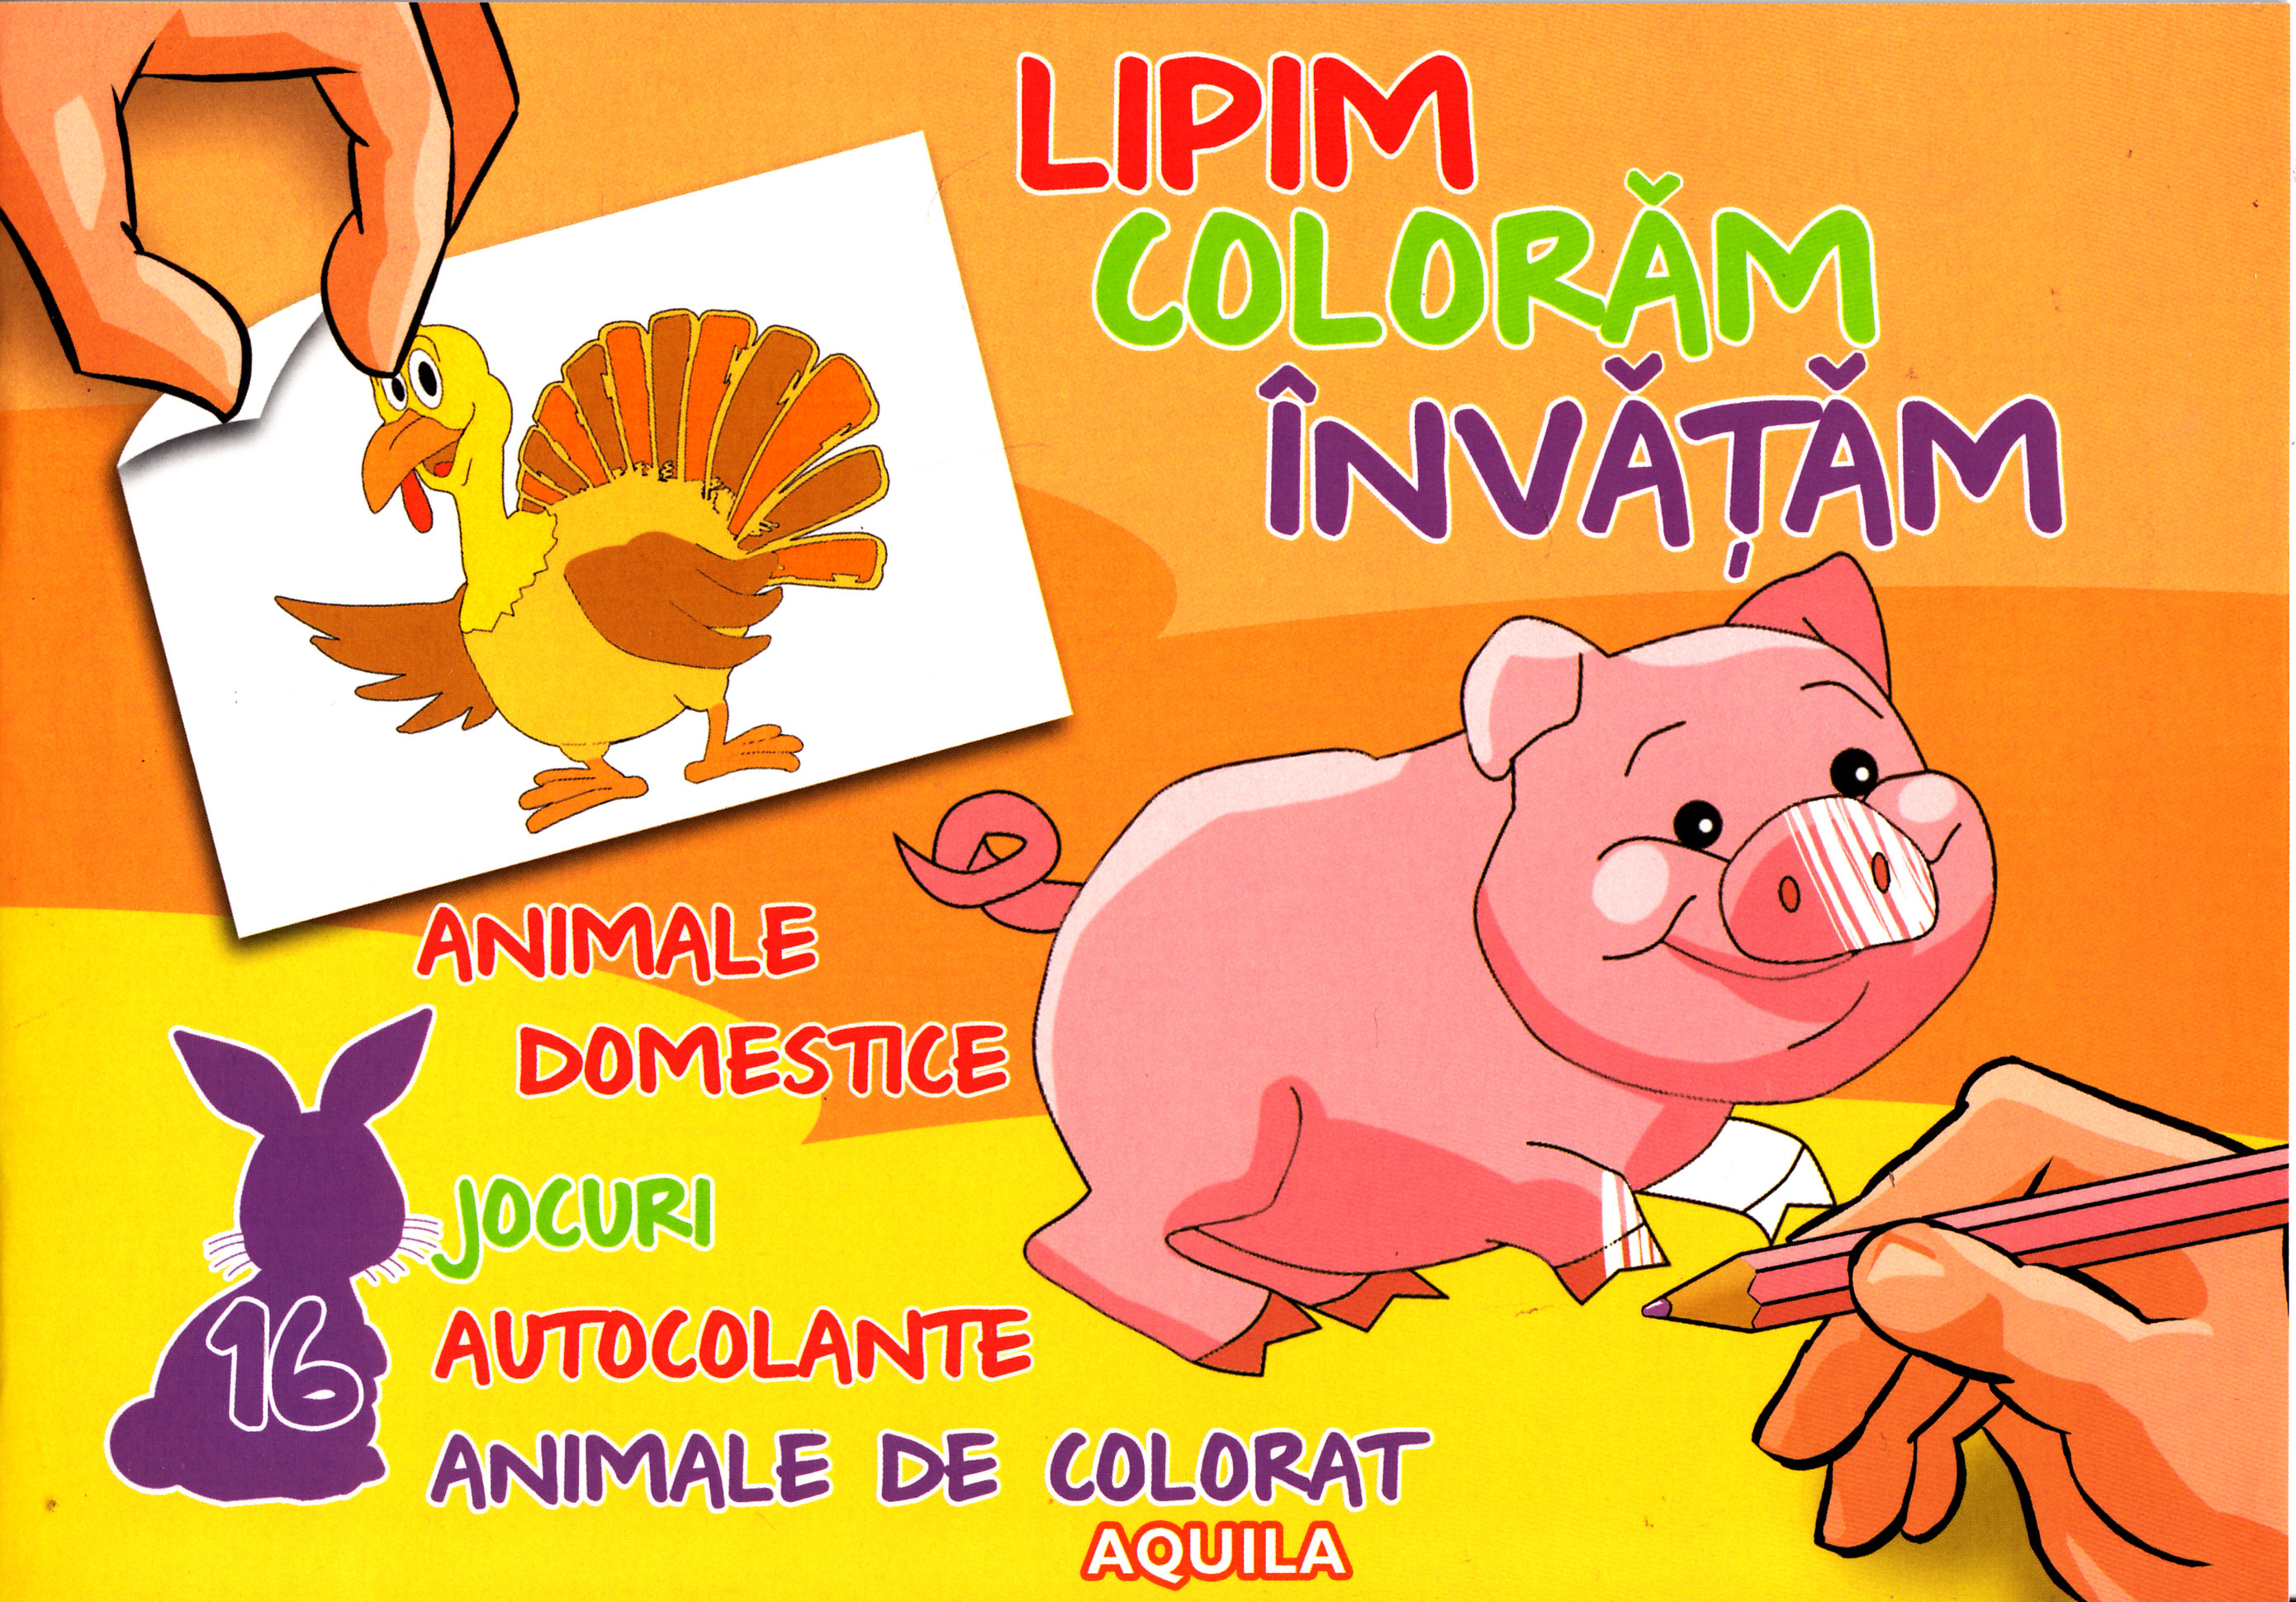 Lipim, coloram, invatam - Animale domestice